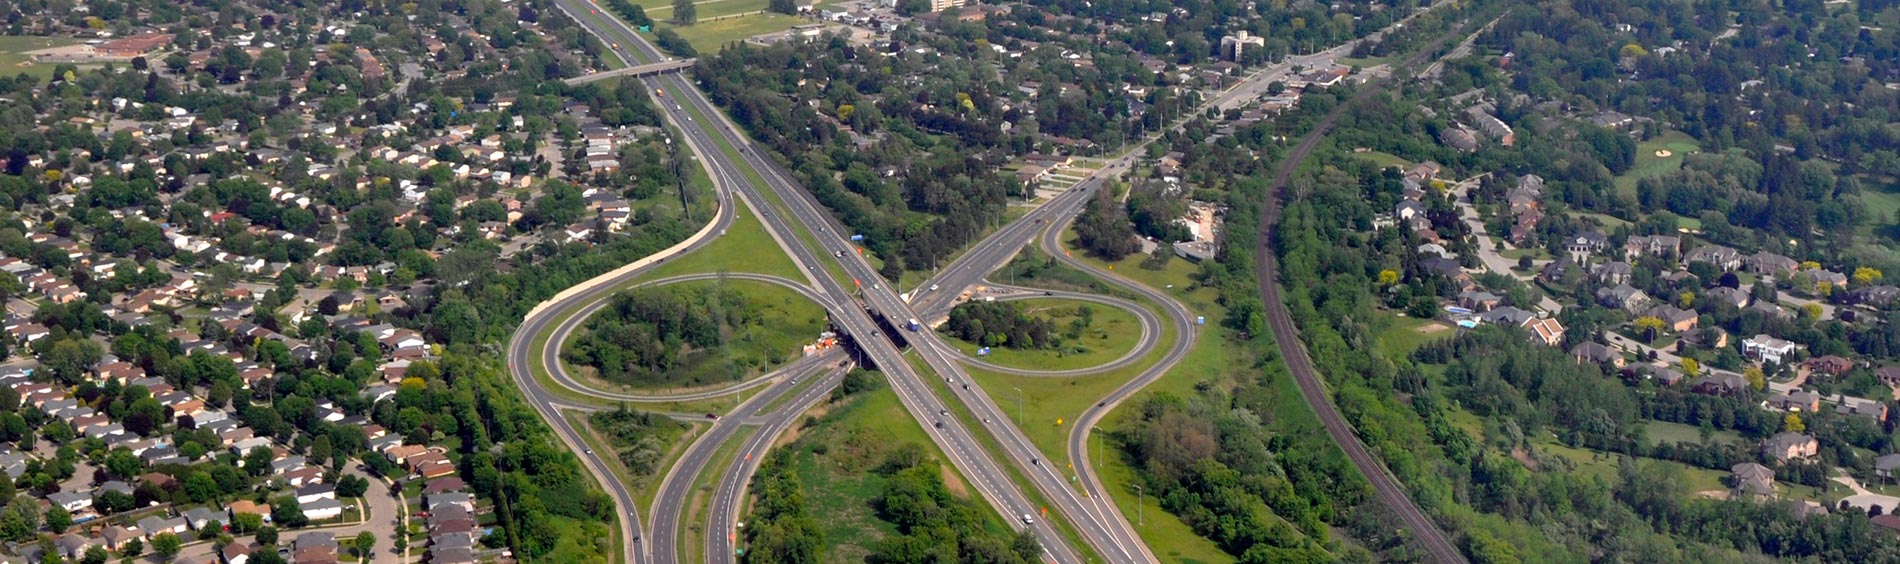 Aerial image of highway 403